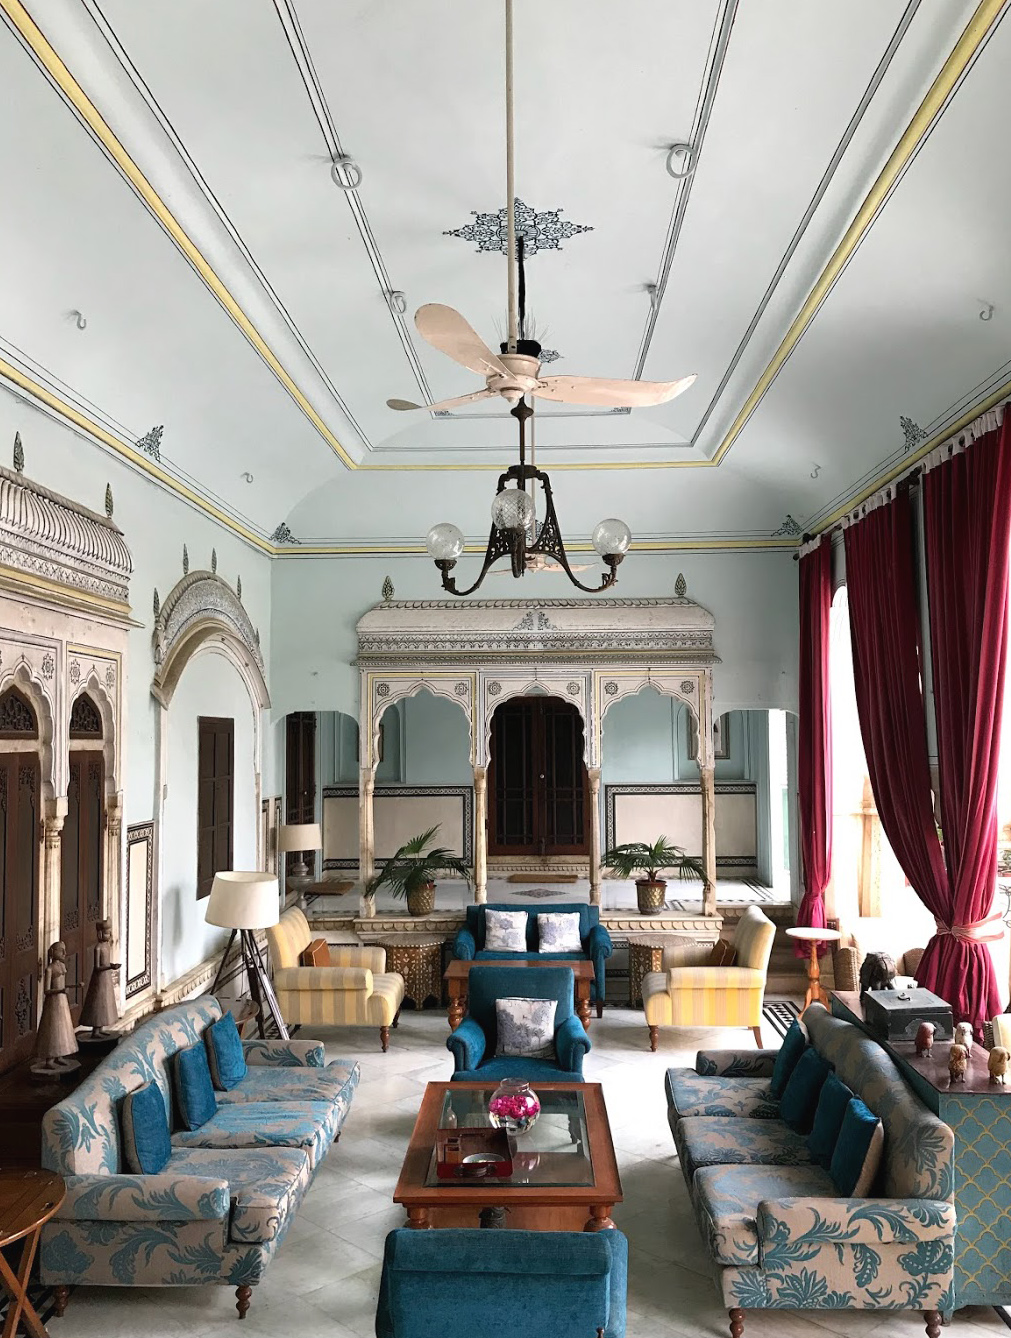 natural, interior design, india, vernacular, haveli, shivani dogra, blue walls 